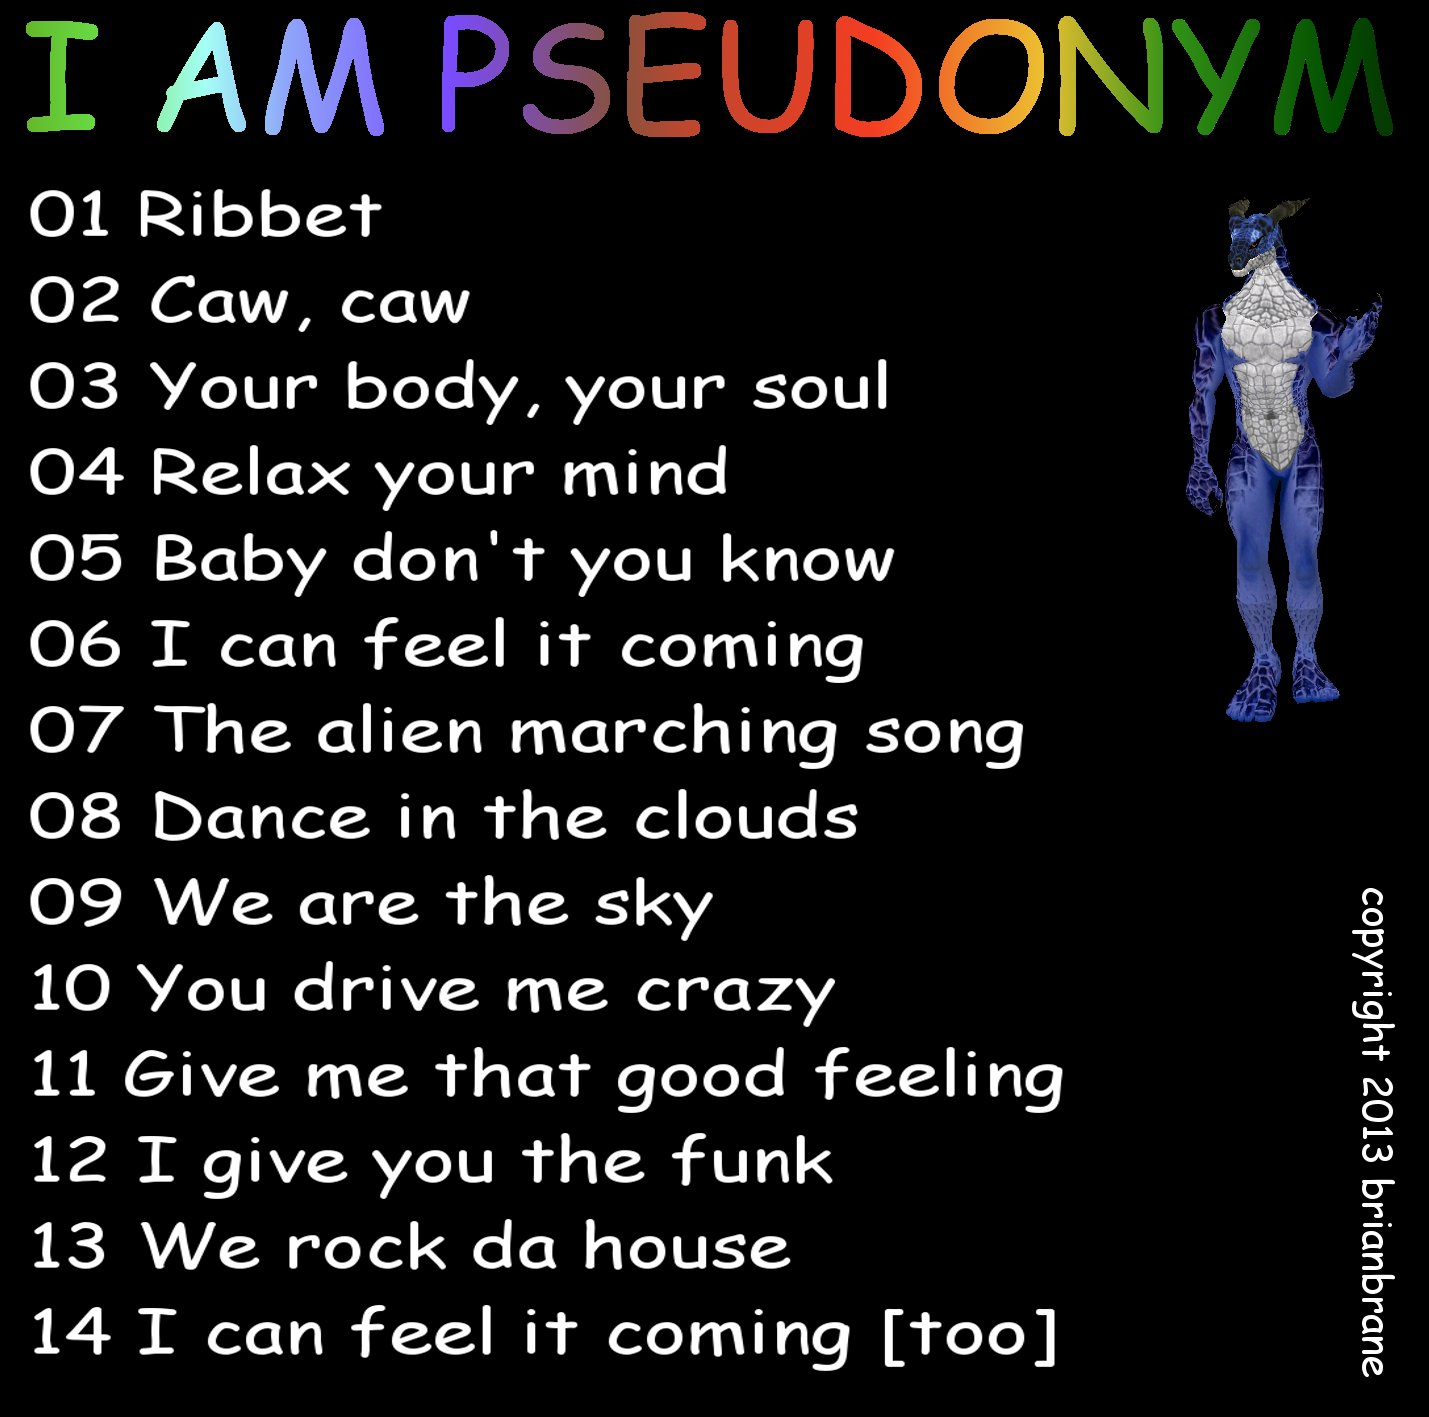 I AM PSEUDONYM